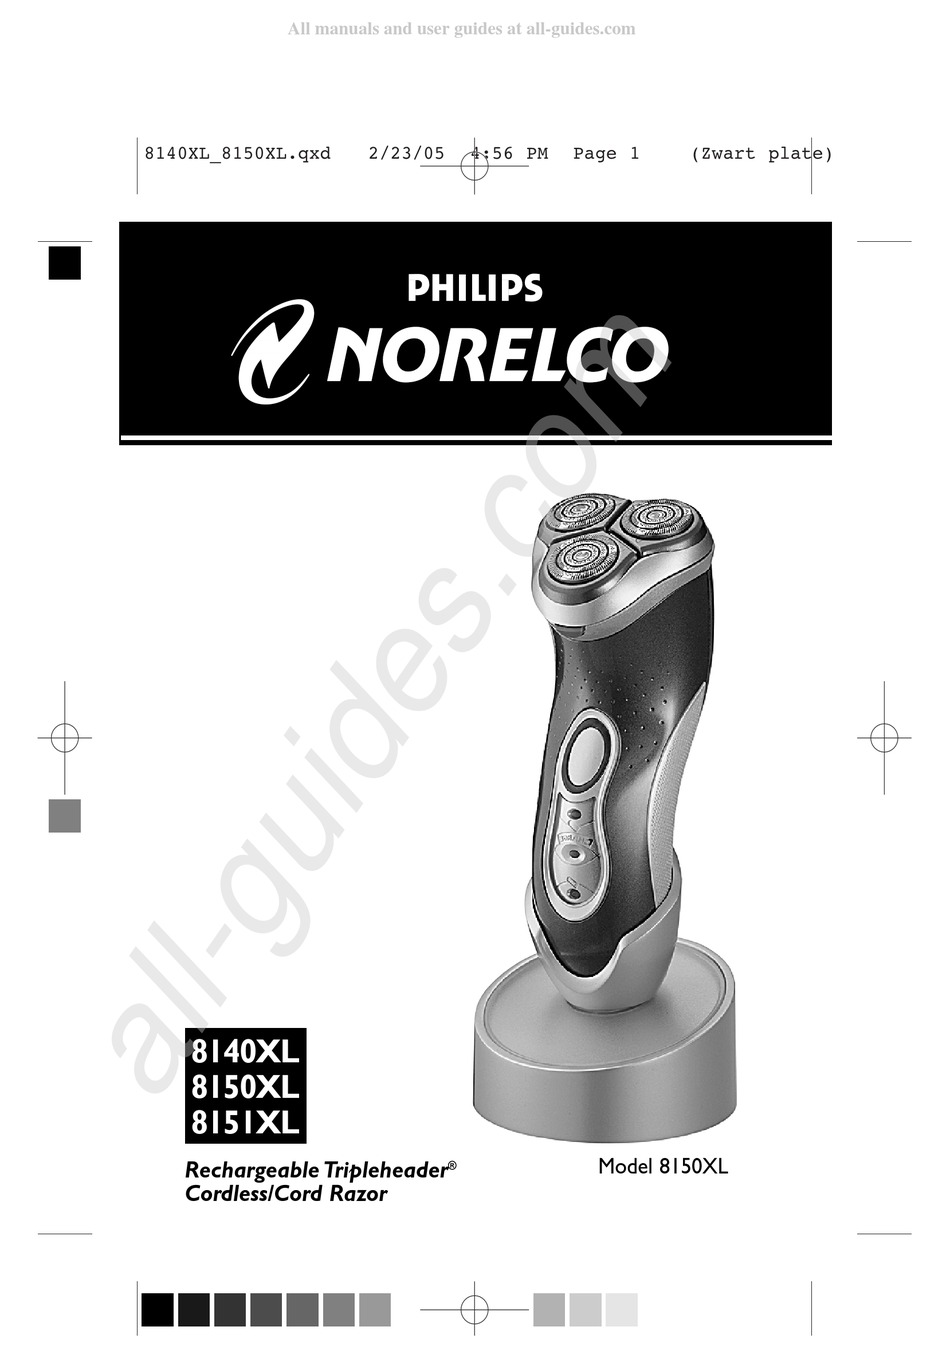 PHILIPS NORELCO 8140XL MANUAL Pdf Download ManualsLib